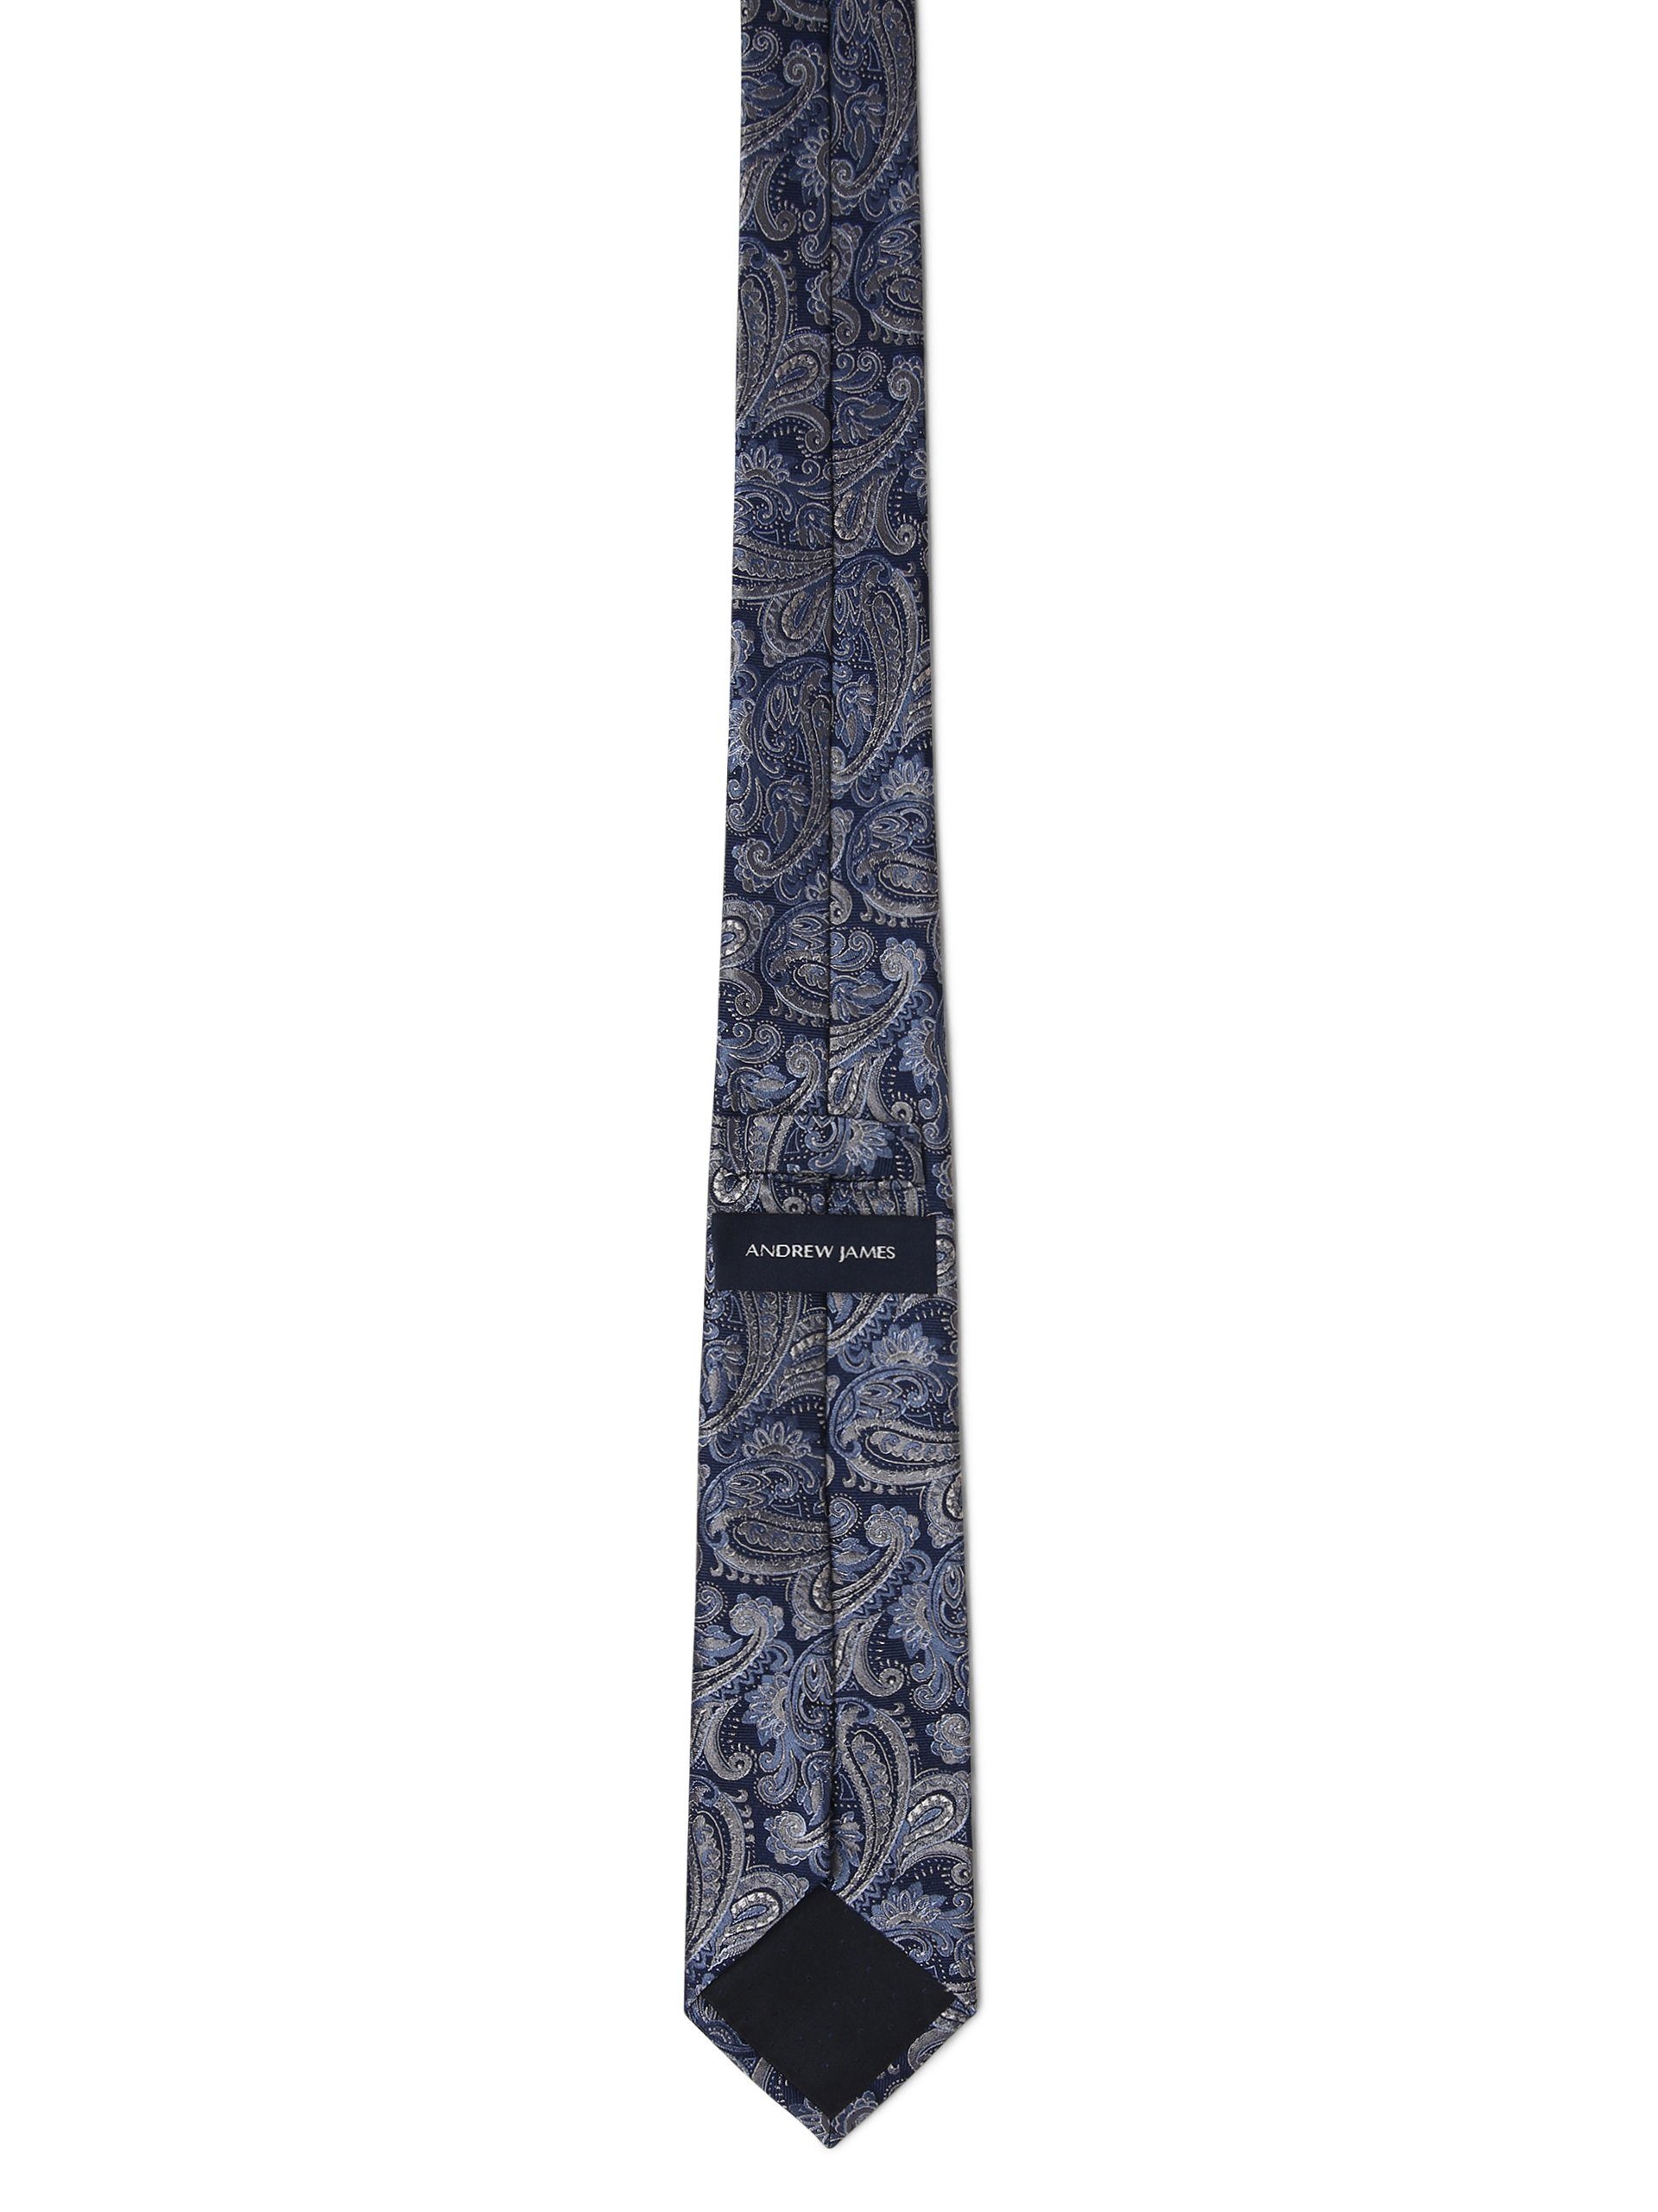 Krawatte Andrew James hellblau marine